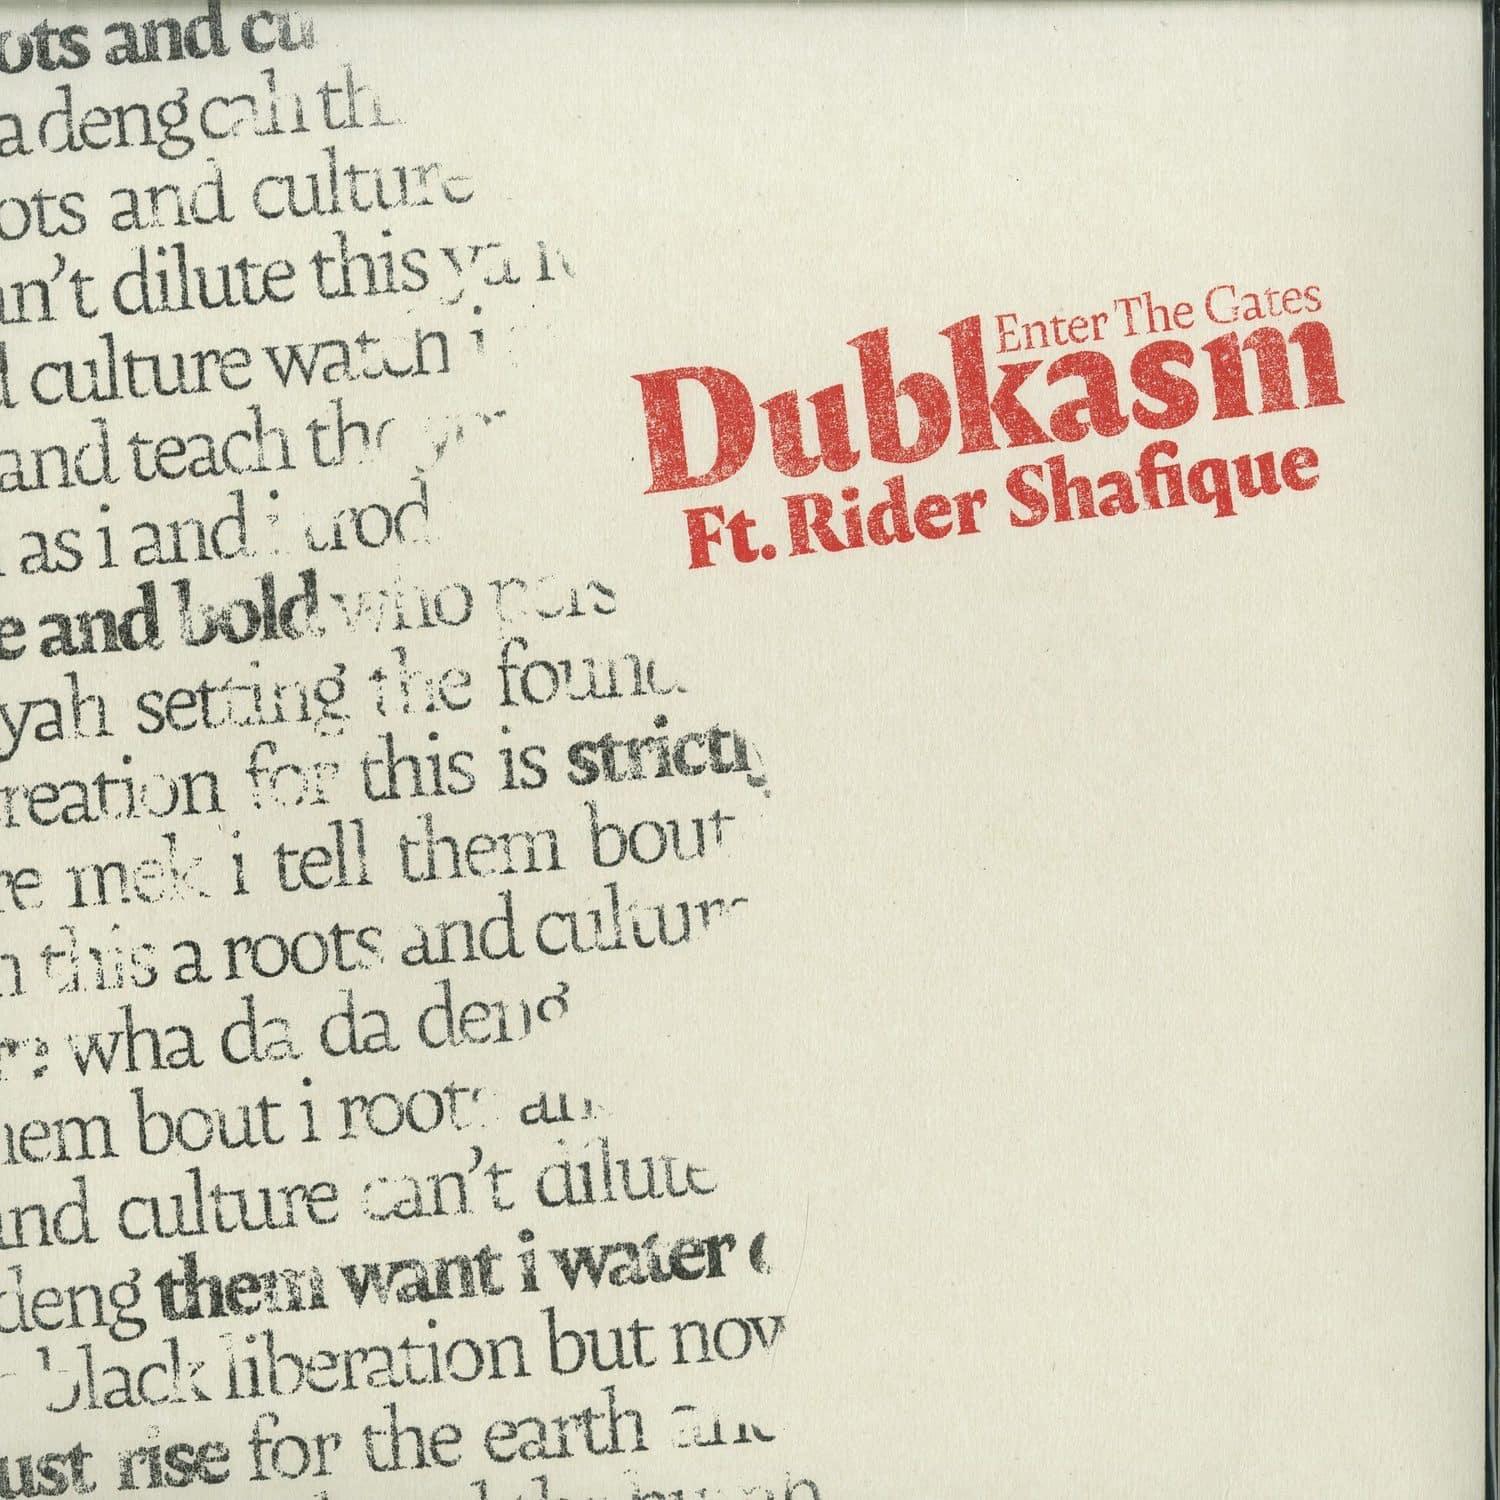 Dubkasm ft. Rider Shafique - ENTER THE GATES